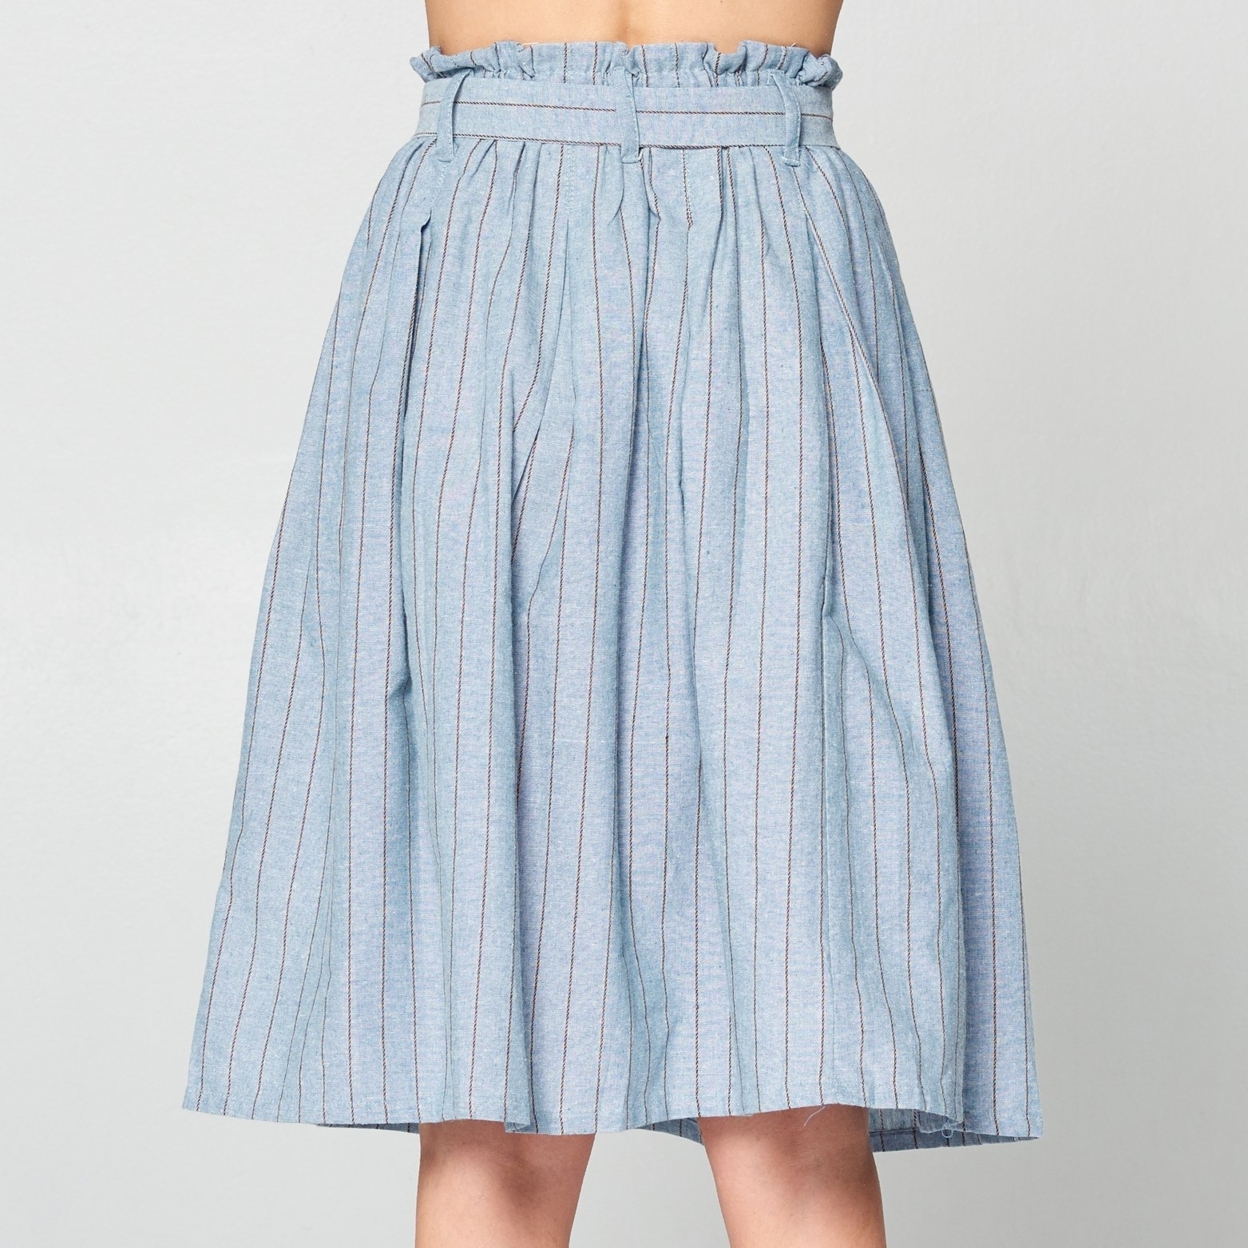 Denim Striped Cotton Skirt - Light Denim, Large (12-14)